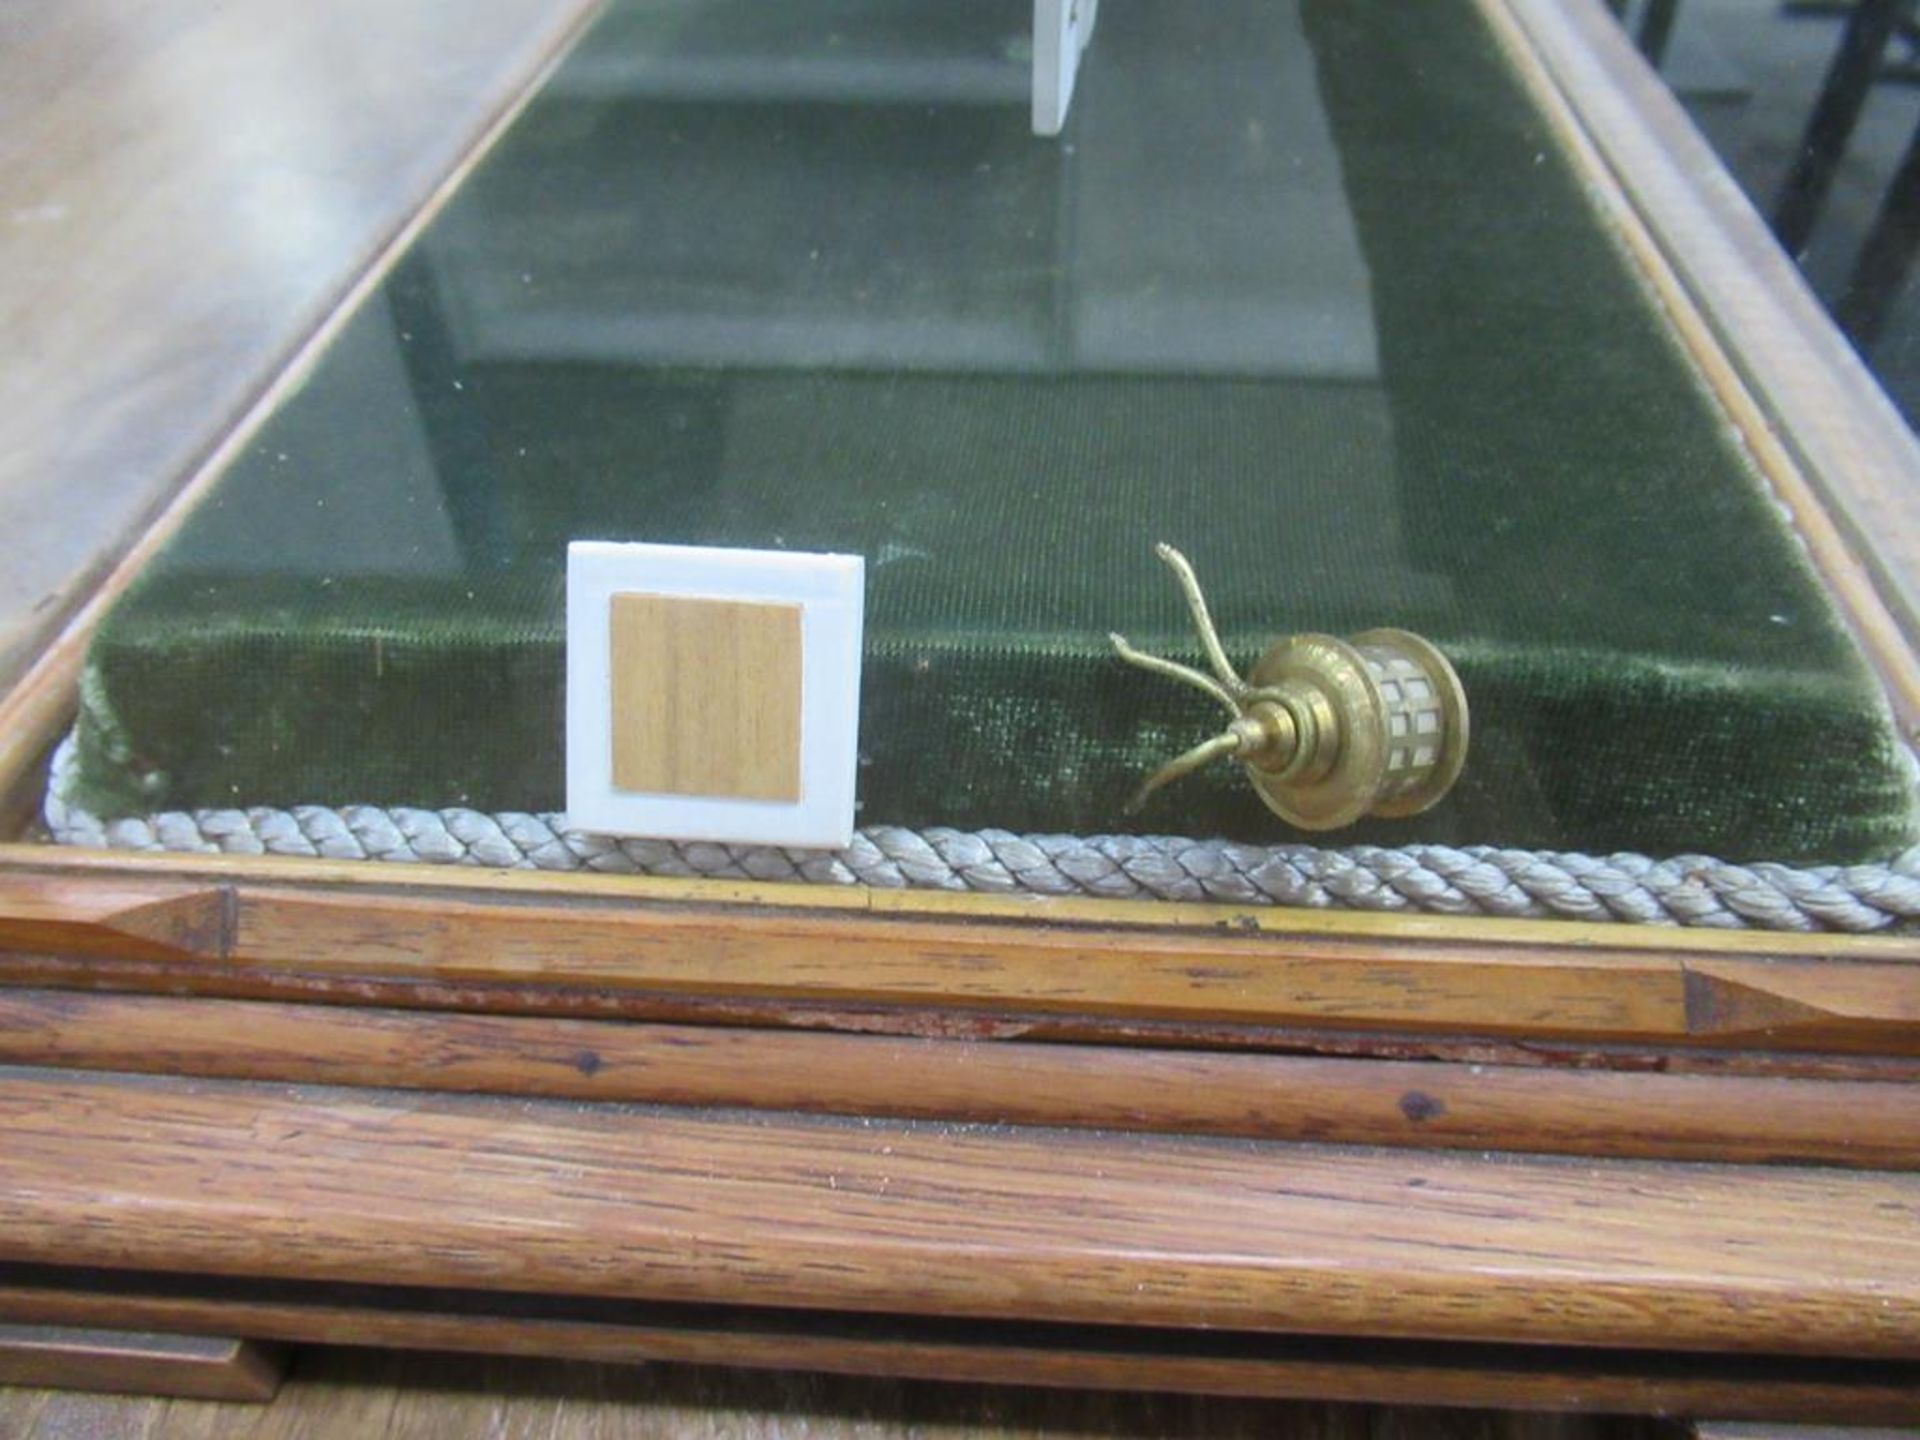 Royal Caroline Model Boat in Glass Cabinet - Image 7 of 12